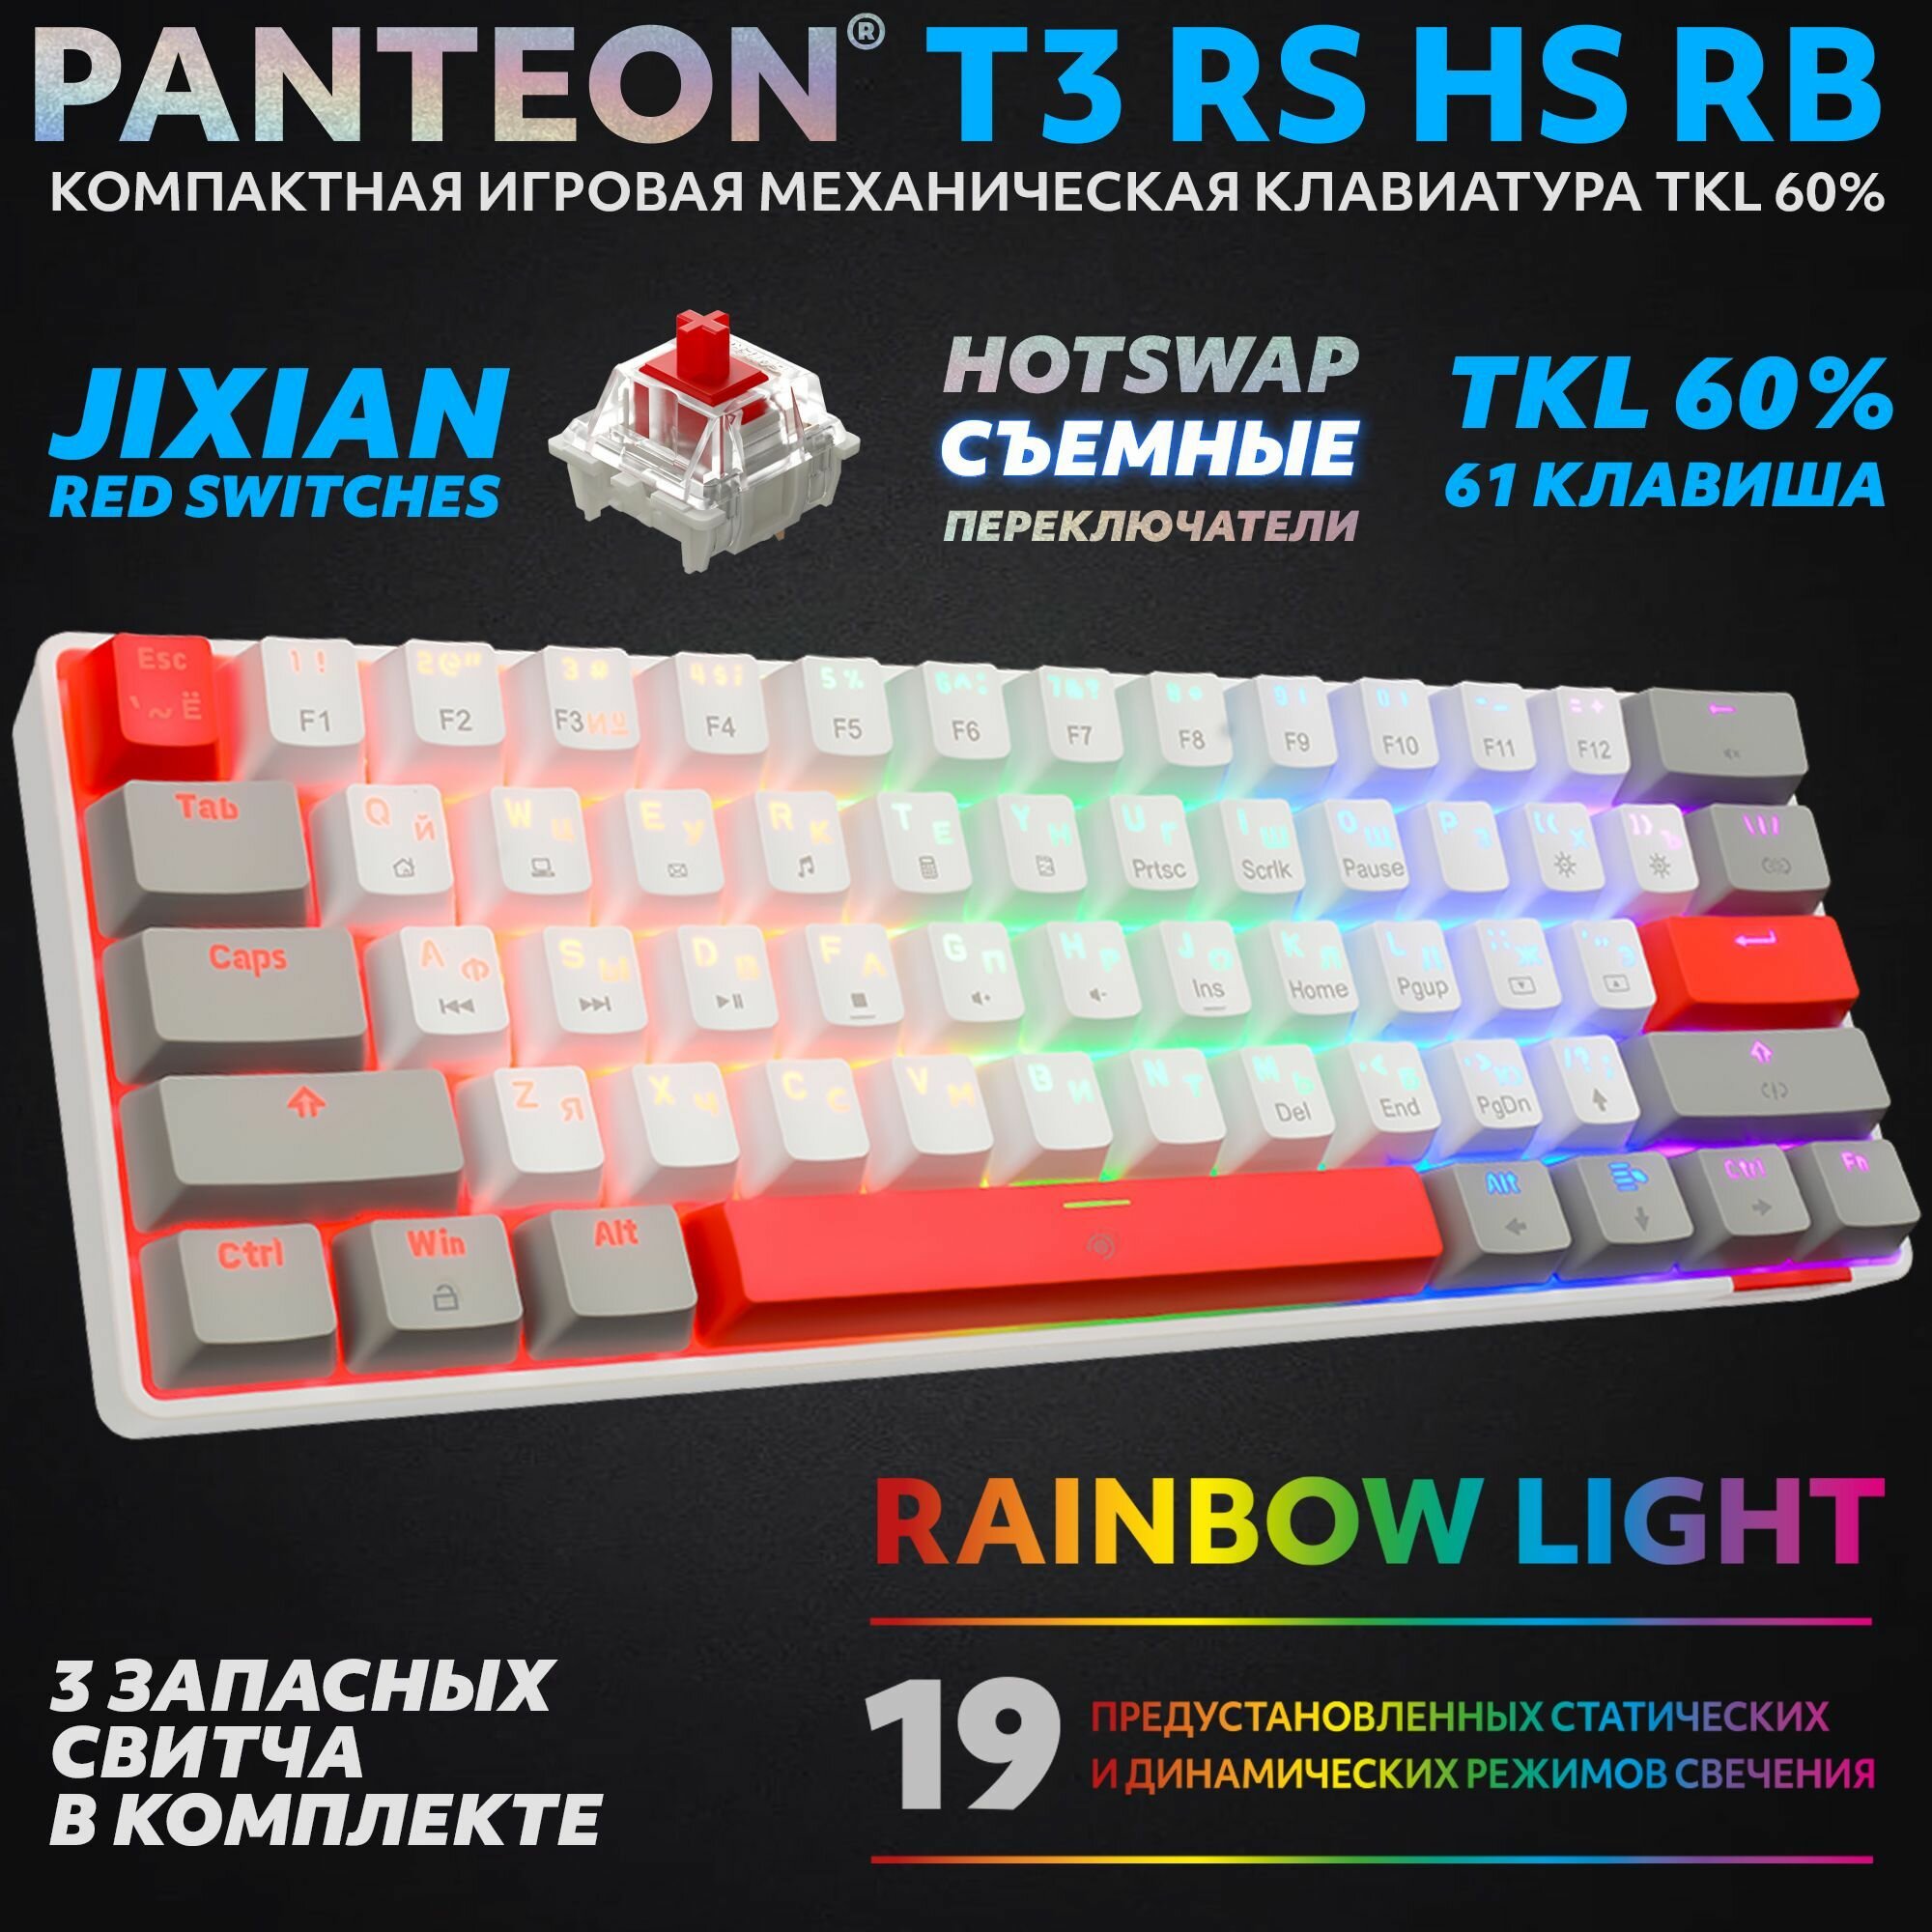 PANTEON T3 RS HS RB White-Grey (37) Механическая клавиатура (TKL 60% подсветка LED RAINBOW Jixian Red 61 кл HotSwap USB) цвет: белый-серый (37)